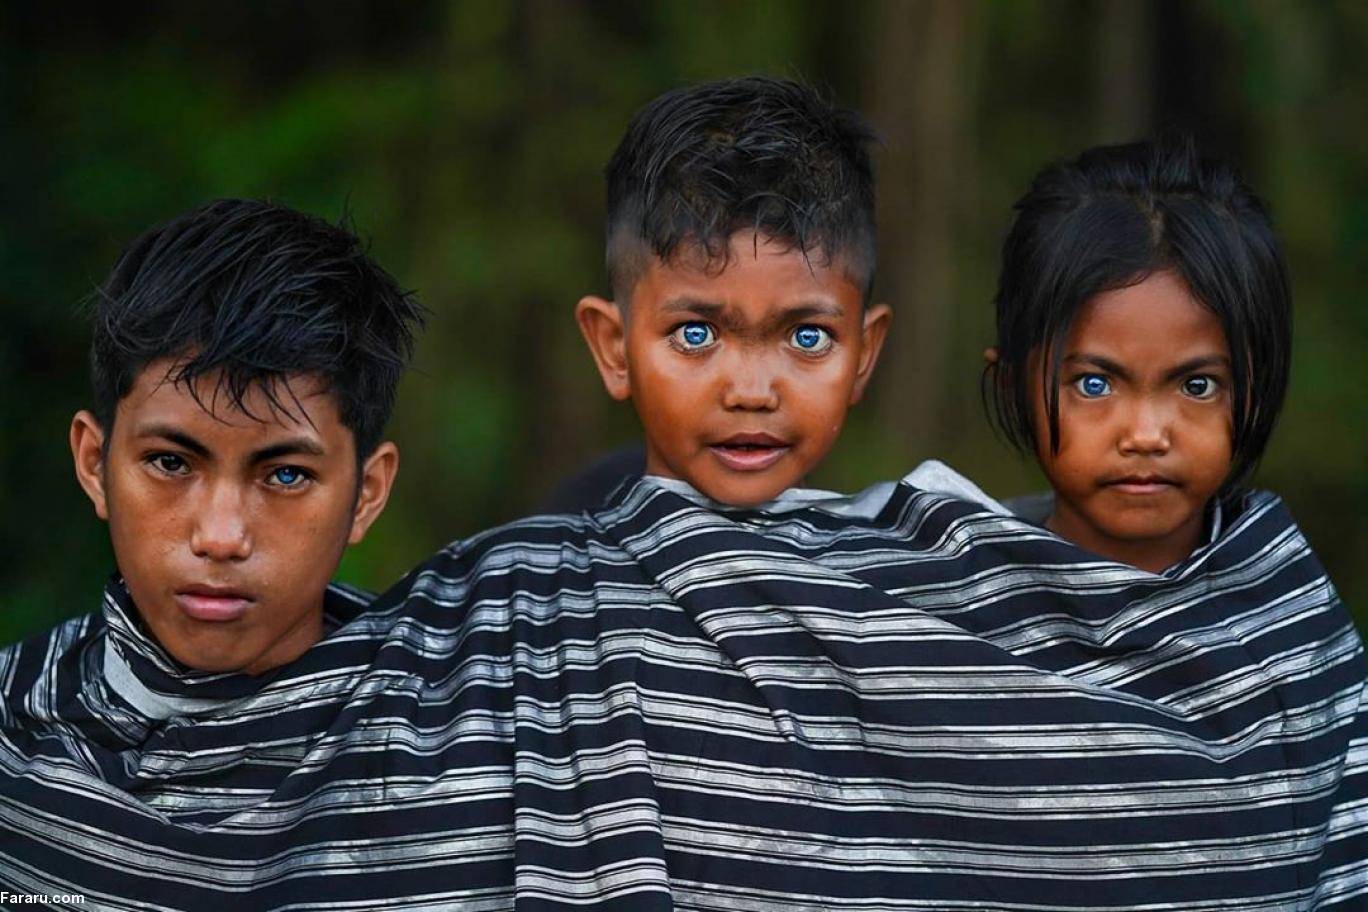 Tribe people. Варденбурга синдром Ваарденбурга. Племя в Индонезии с синими глазами бутунг. Племя бутон на острове бутунг Индонезии.